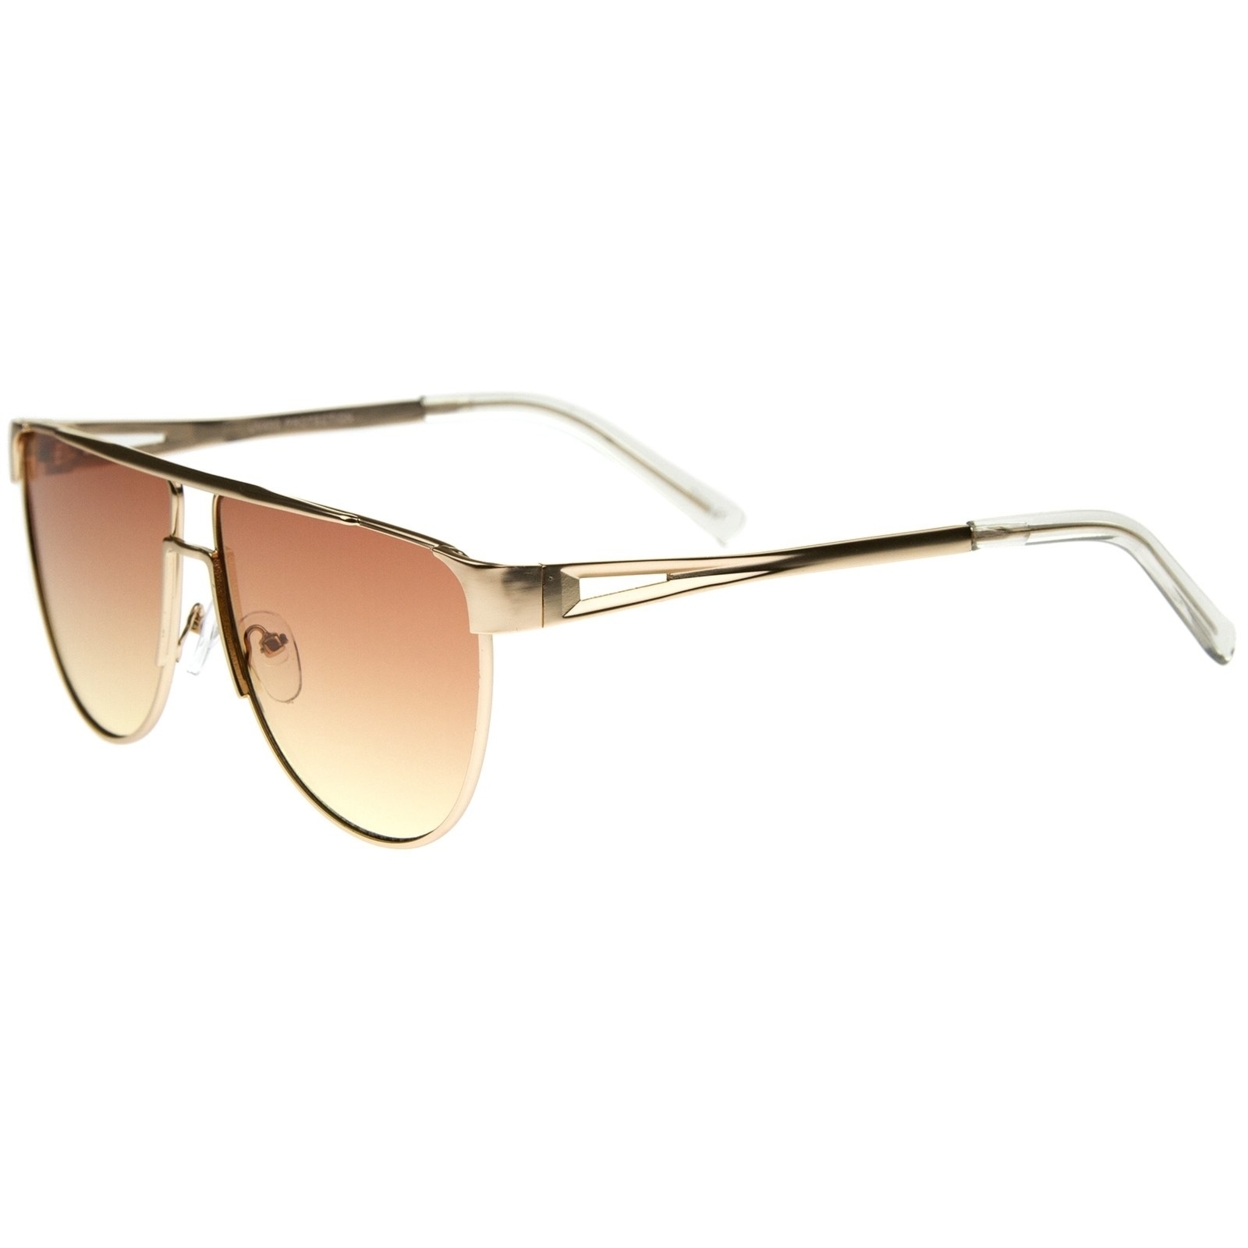 Modern Flat Top Gradient Colored Flat Lens Metal Aviator Sunglasses 63mm - Silver / Purple Gradient